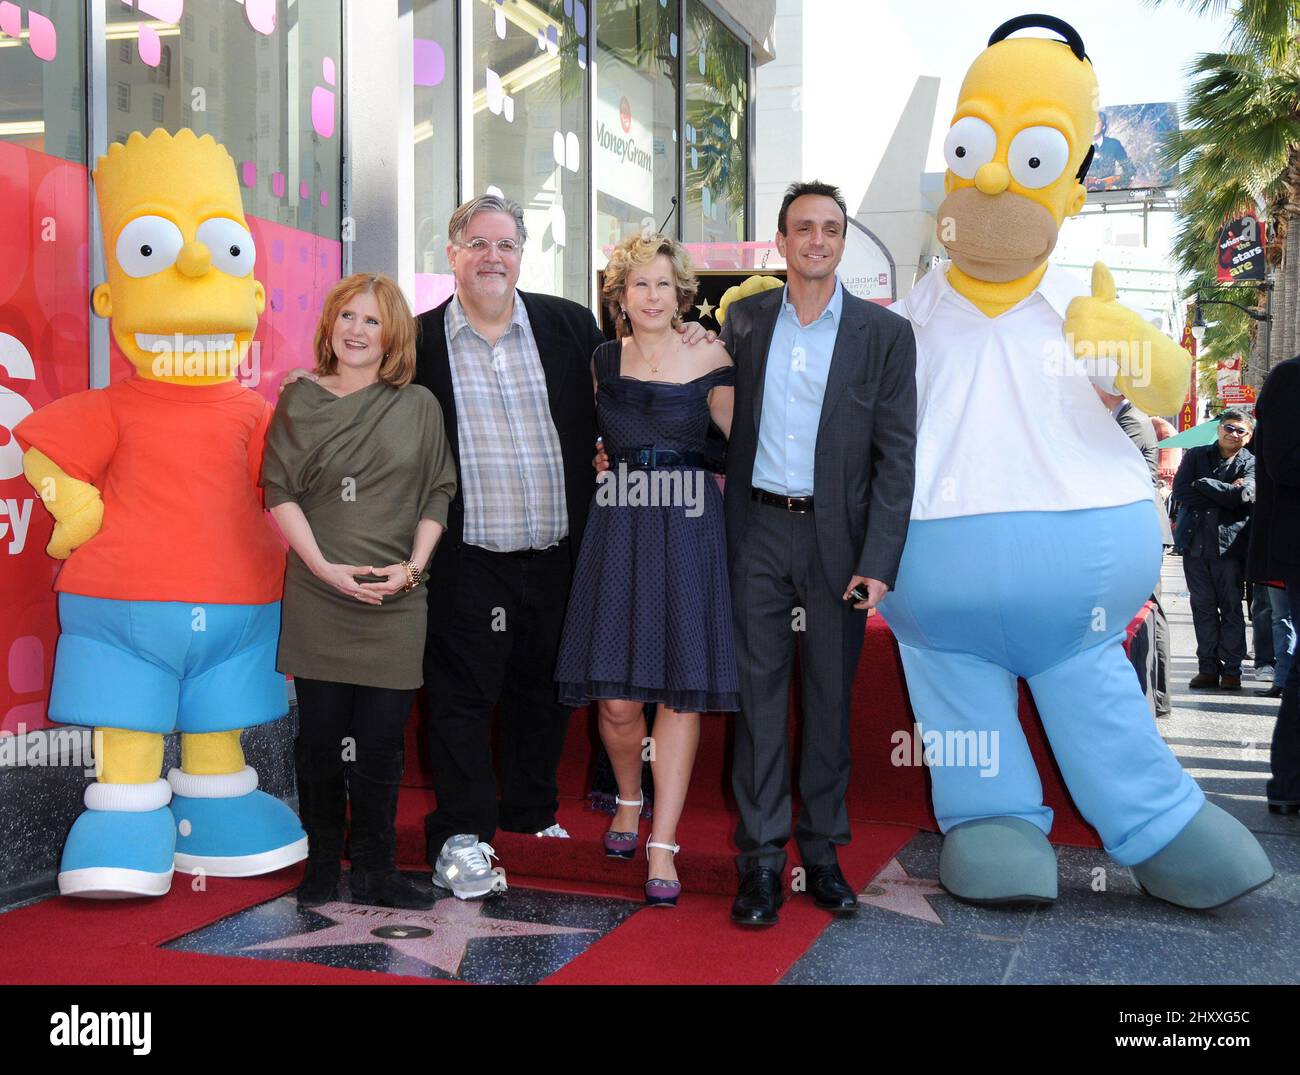 Nancy Cartwright, Matt Groening, Yeardley Smith, Hank Azaria attending Matt Groening's star ceremony in Hollywood in Los Angeles, USA. Stock Photo